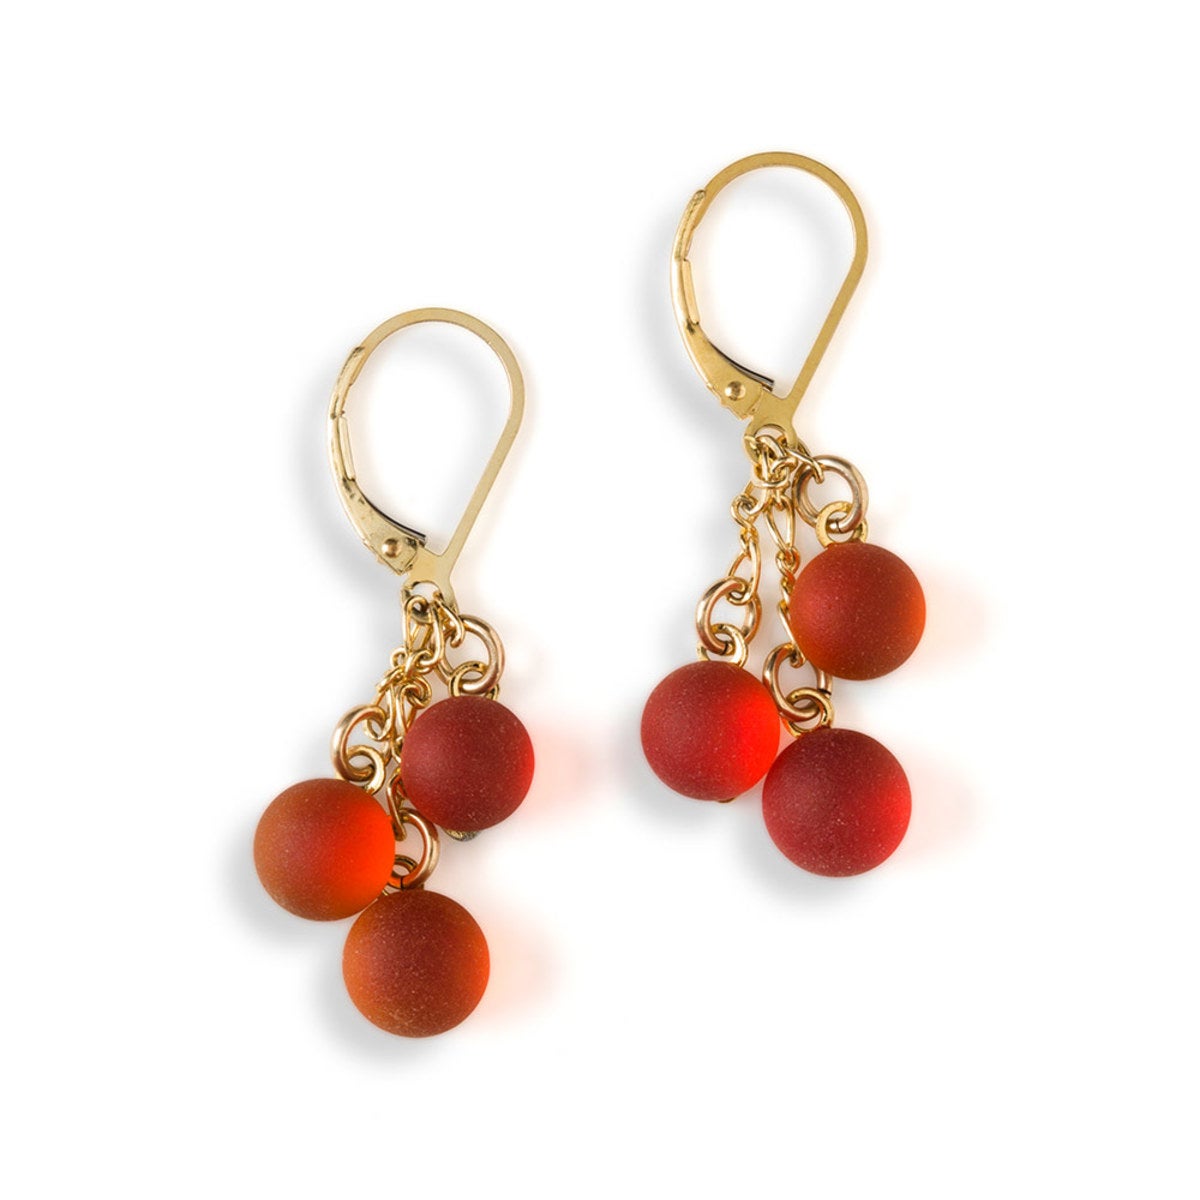 Tiny drop sea glass earrings - cultured beach glass jewelry | eBay